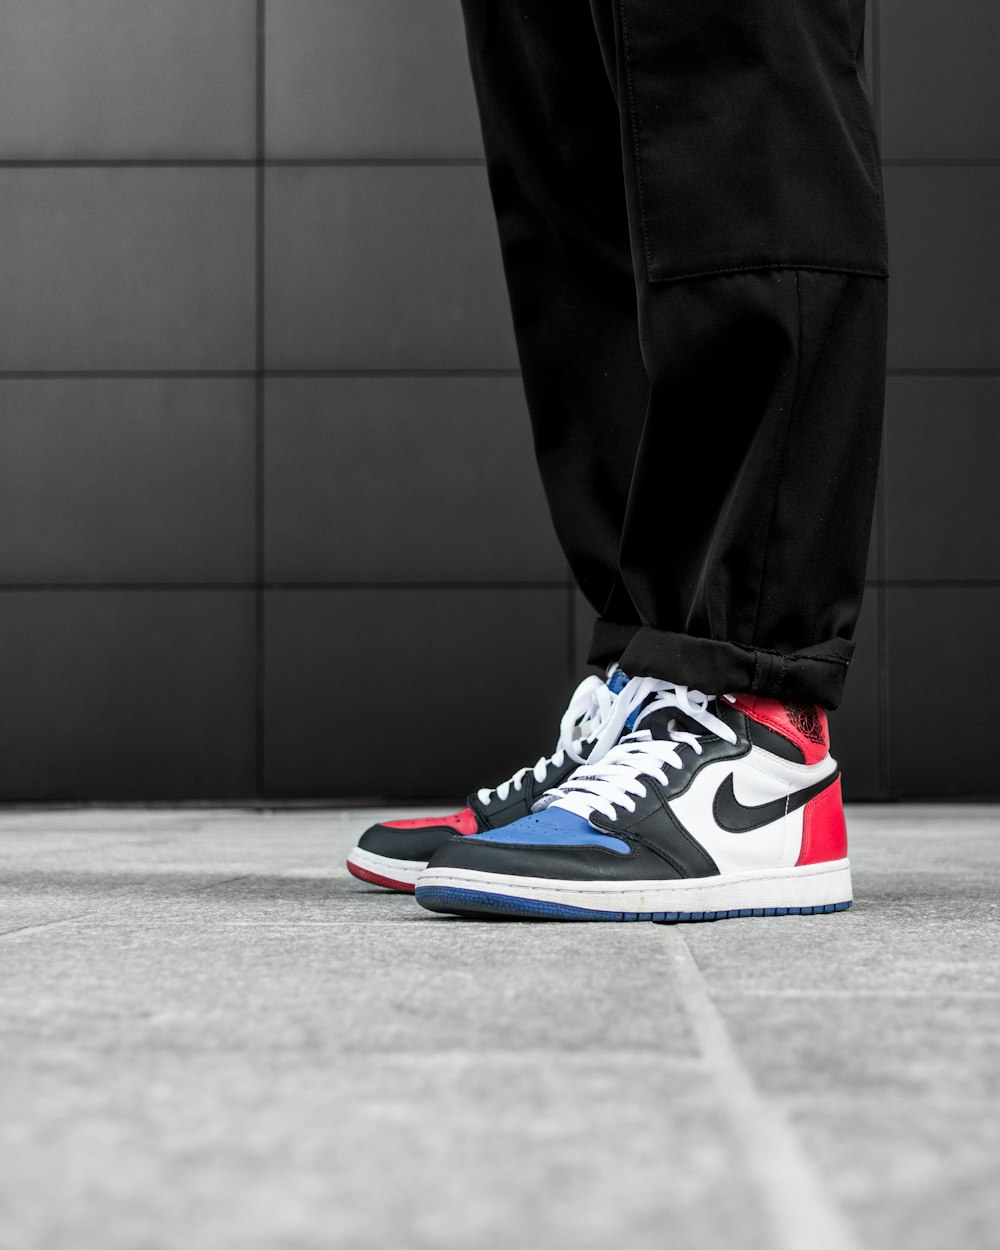 man wears blue-red-and-black Nike Air Jordan 1 shoes photo – Free Shoe  Image on Unsplash